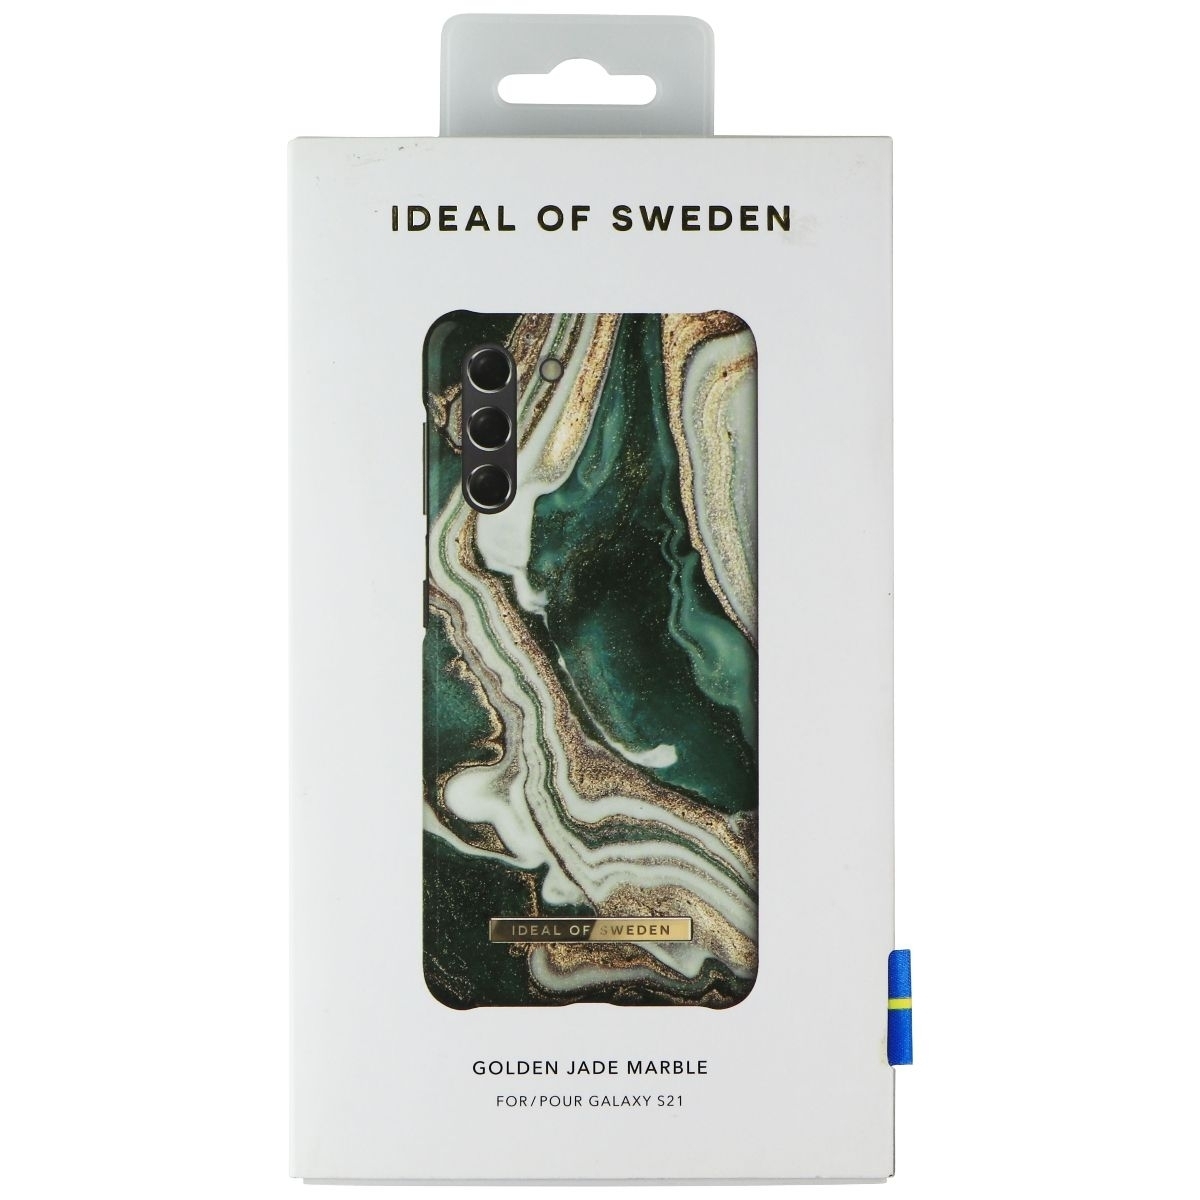 IDeal Of Sweden Hard Case For Samsung Galaxy S21 - Golden Jade Marble/Green (Refurbished)